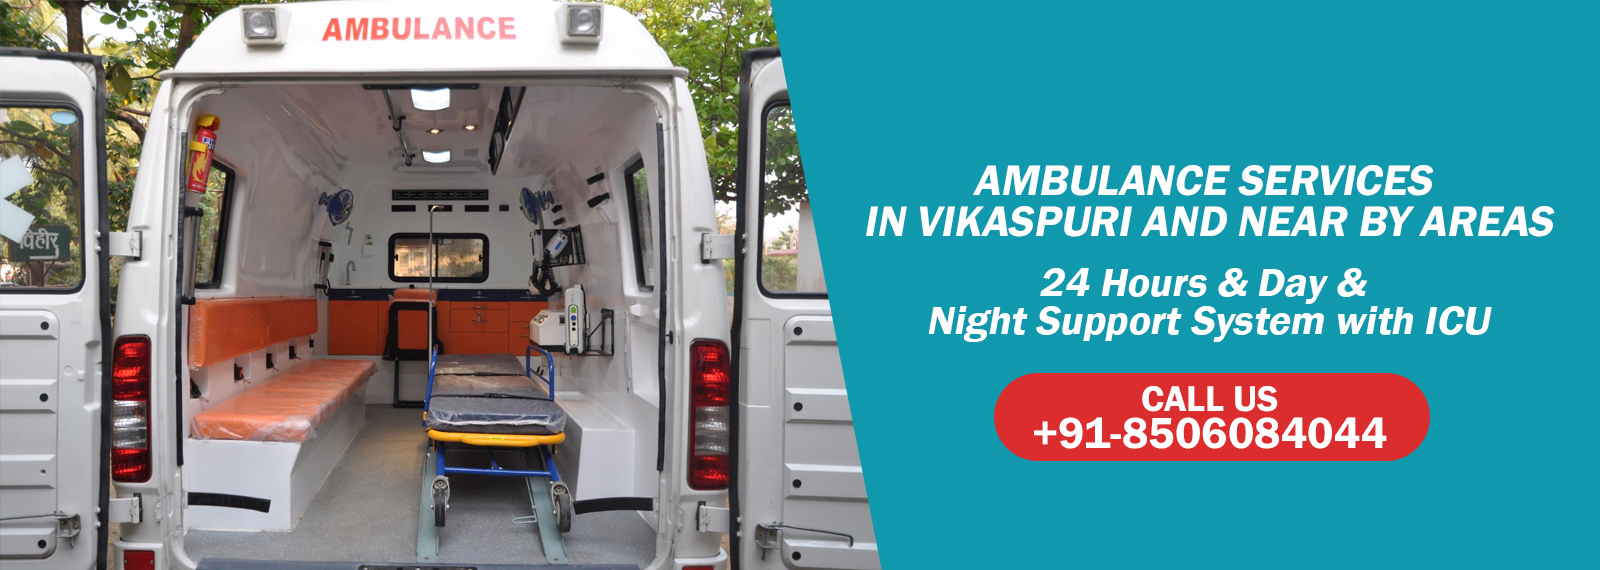 Ambulance Services in Vikas Puri